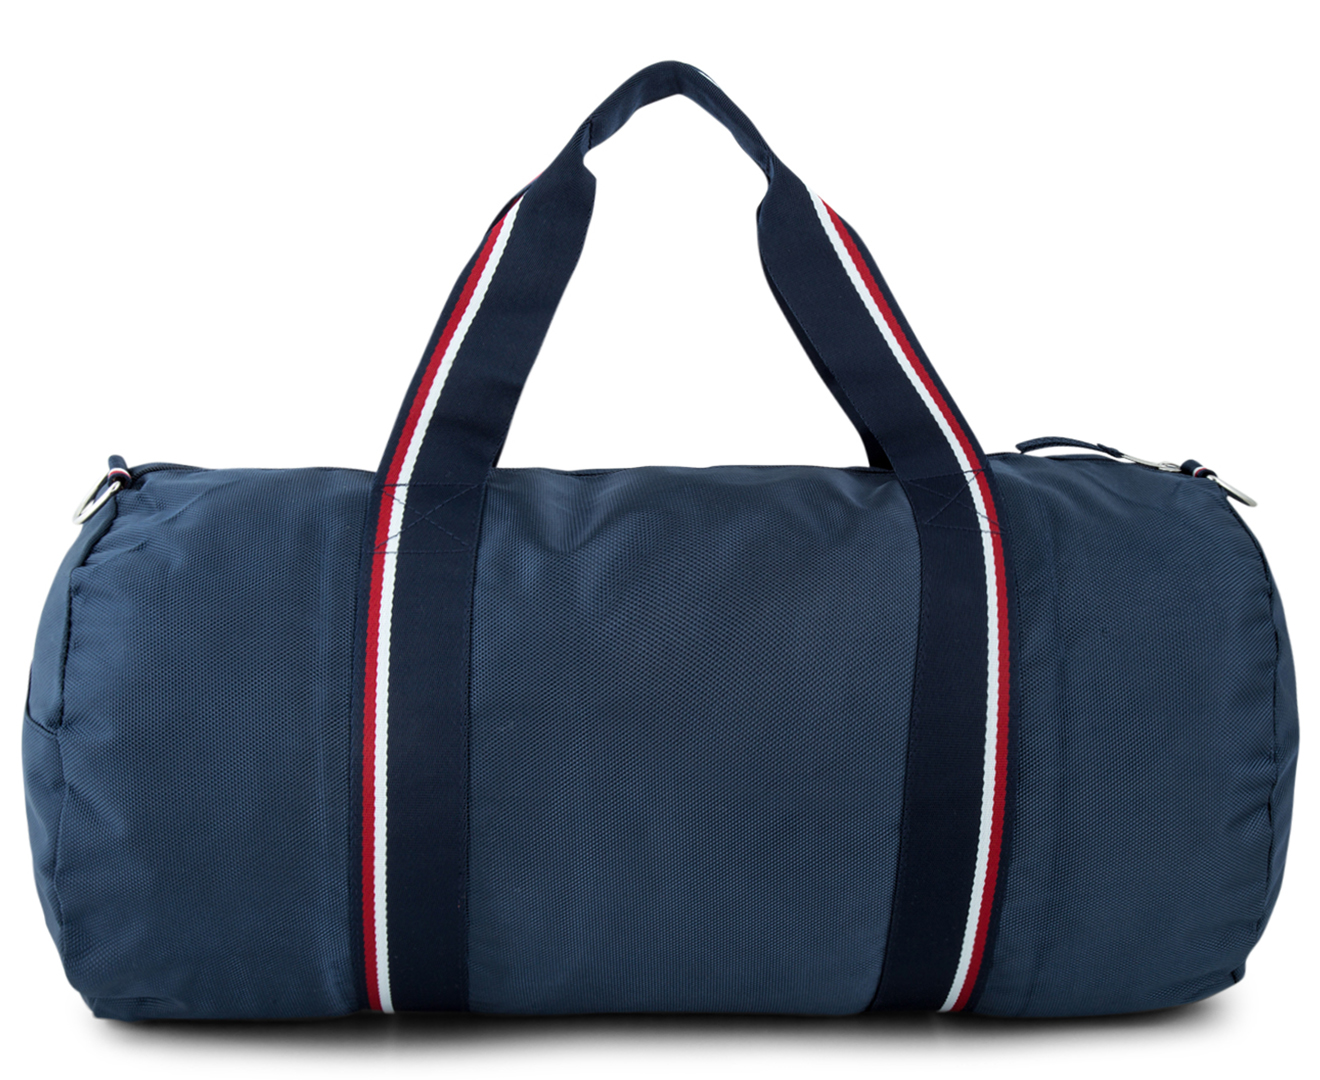 Tommy Hilfiger 65L Duffle Bag - Navy/Red | Catch.com.au